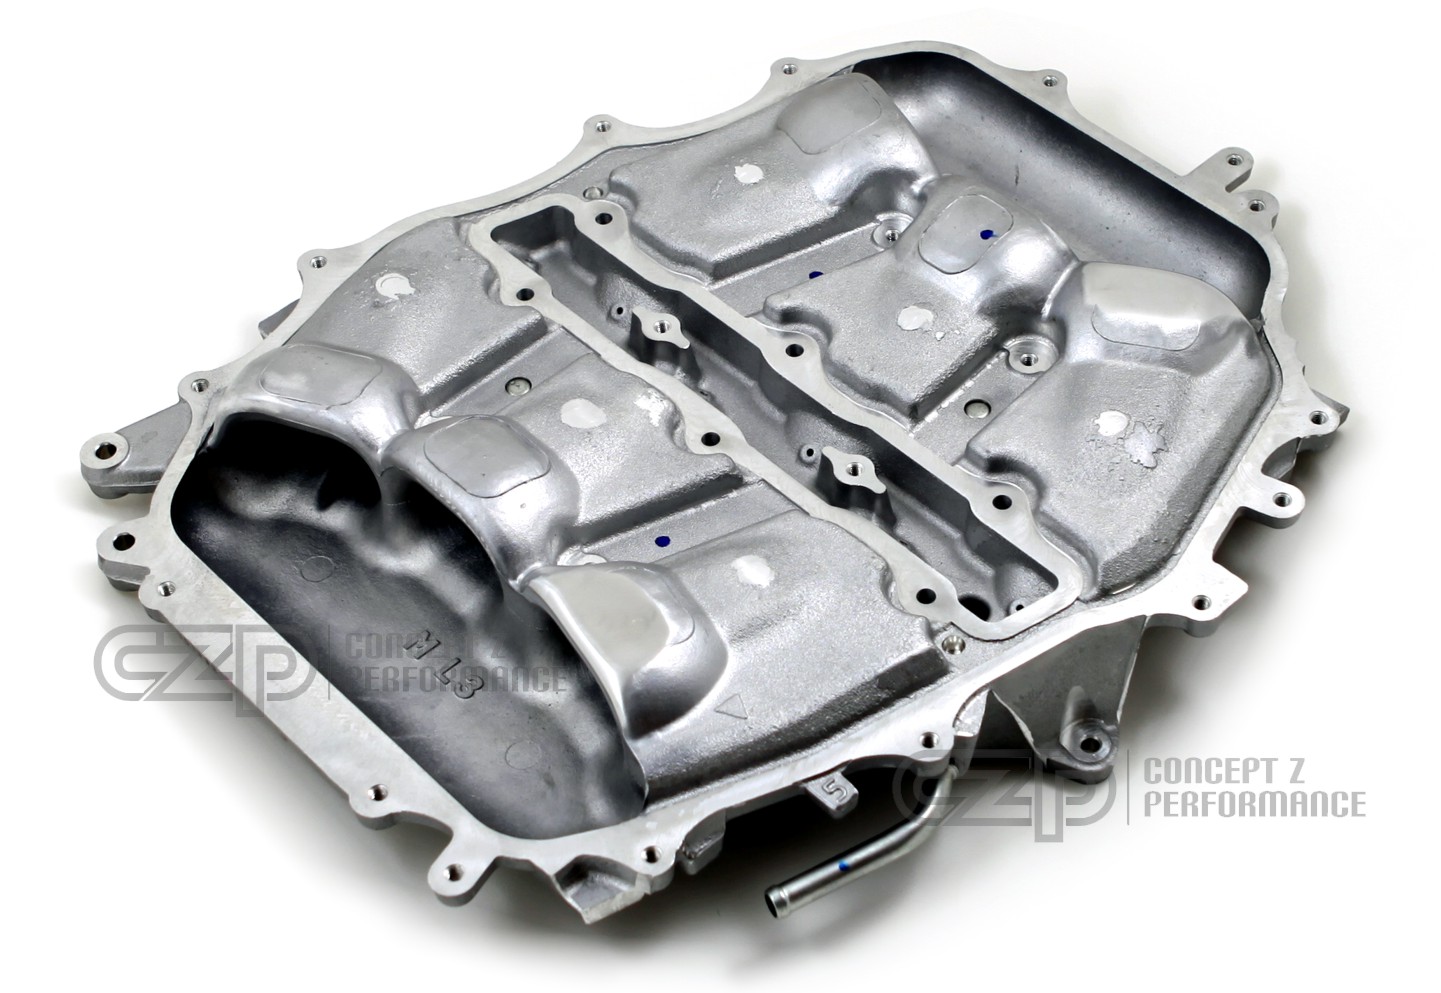 Motordyne Engineering MREV 2 Lower Manifold Upgrade, VQ35DE - Nissan 350Z / Infiniti G35